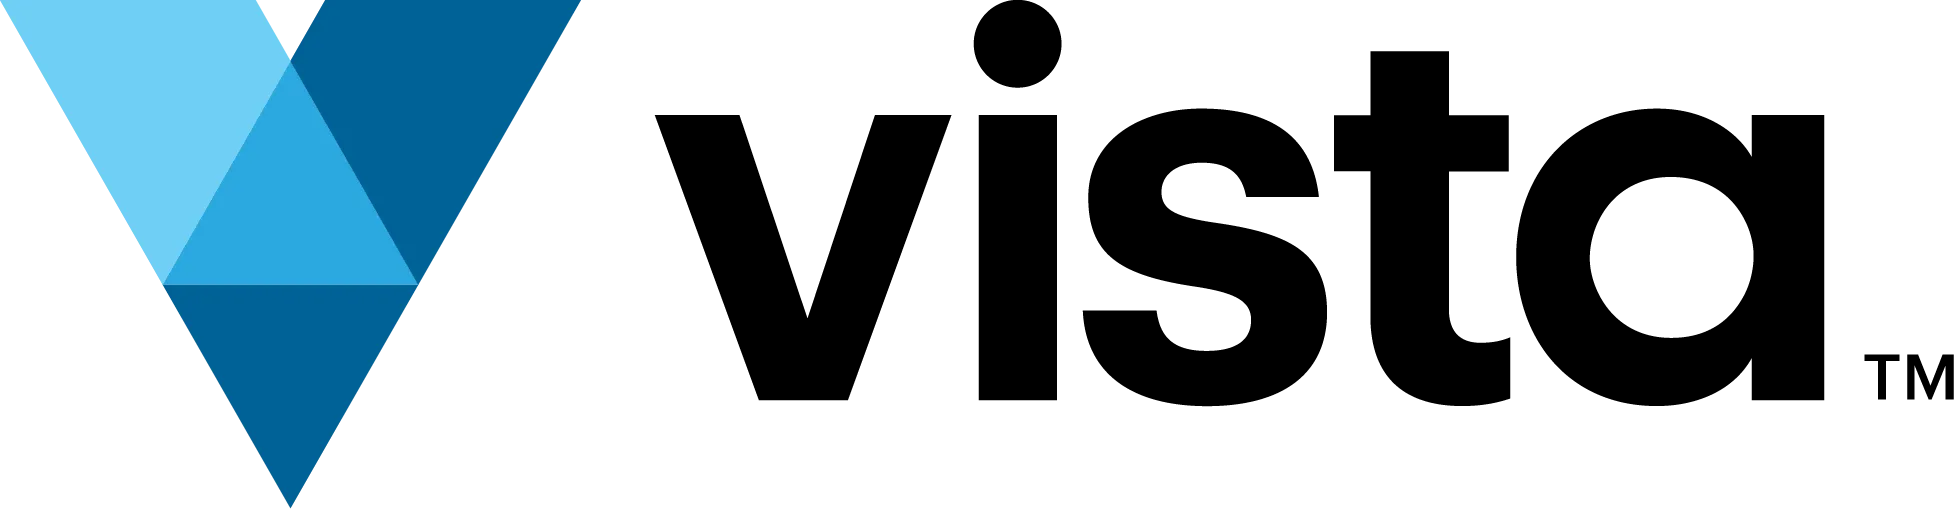 Vistaprint Promo Codes Logo